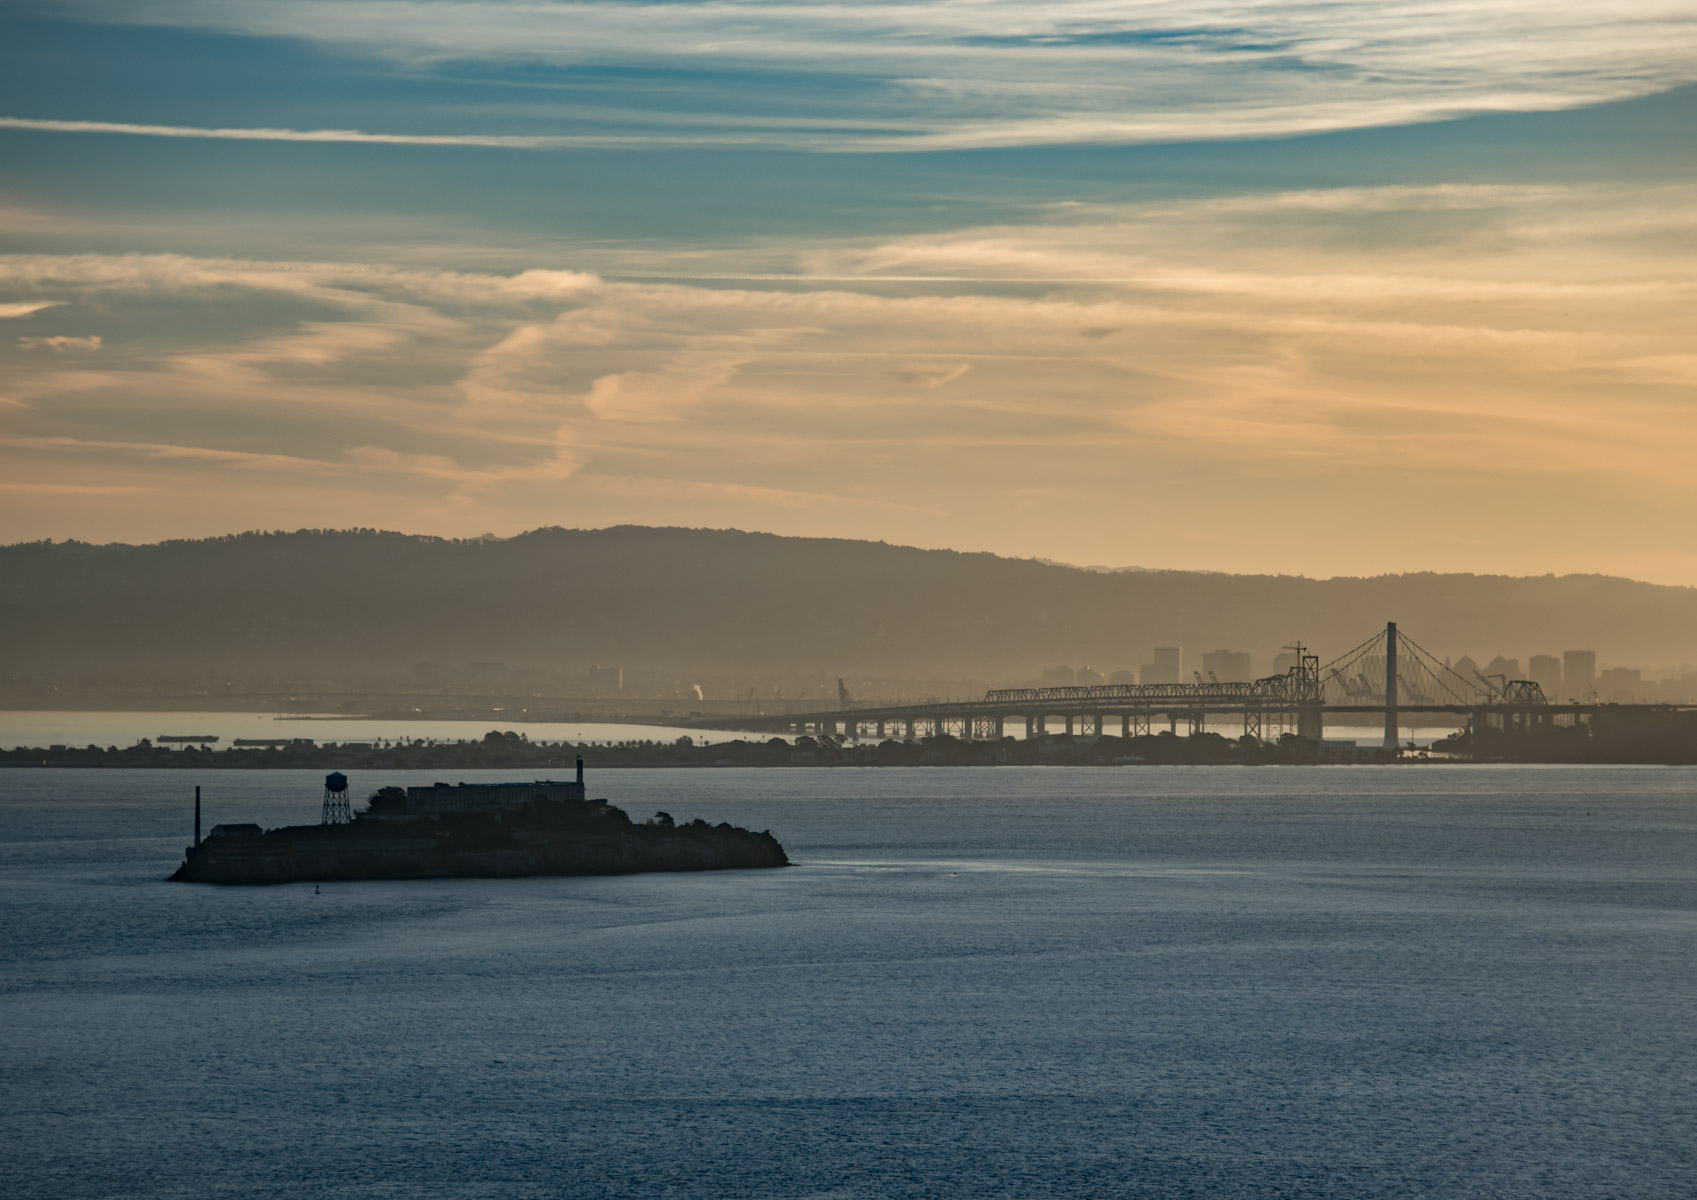 Alcatraz sunrise